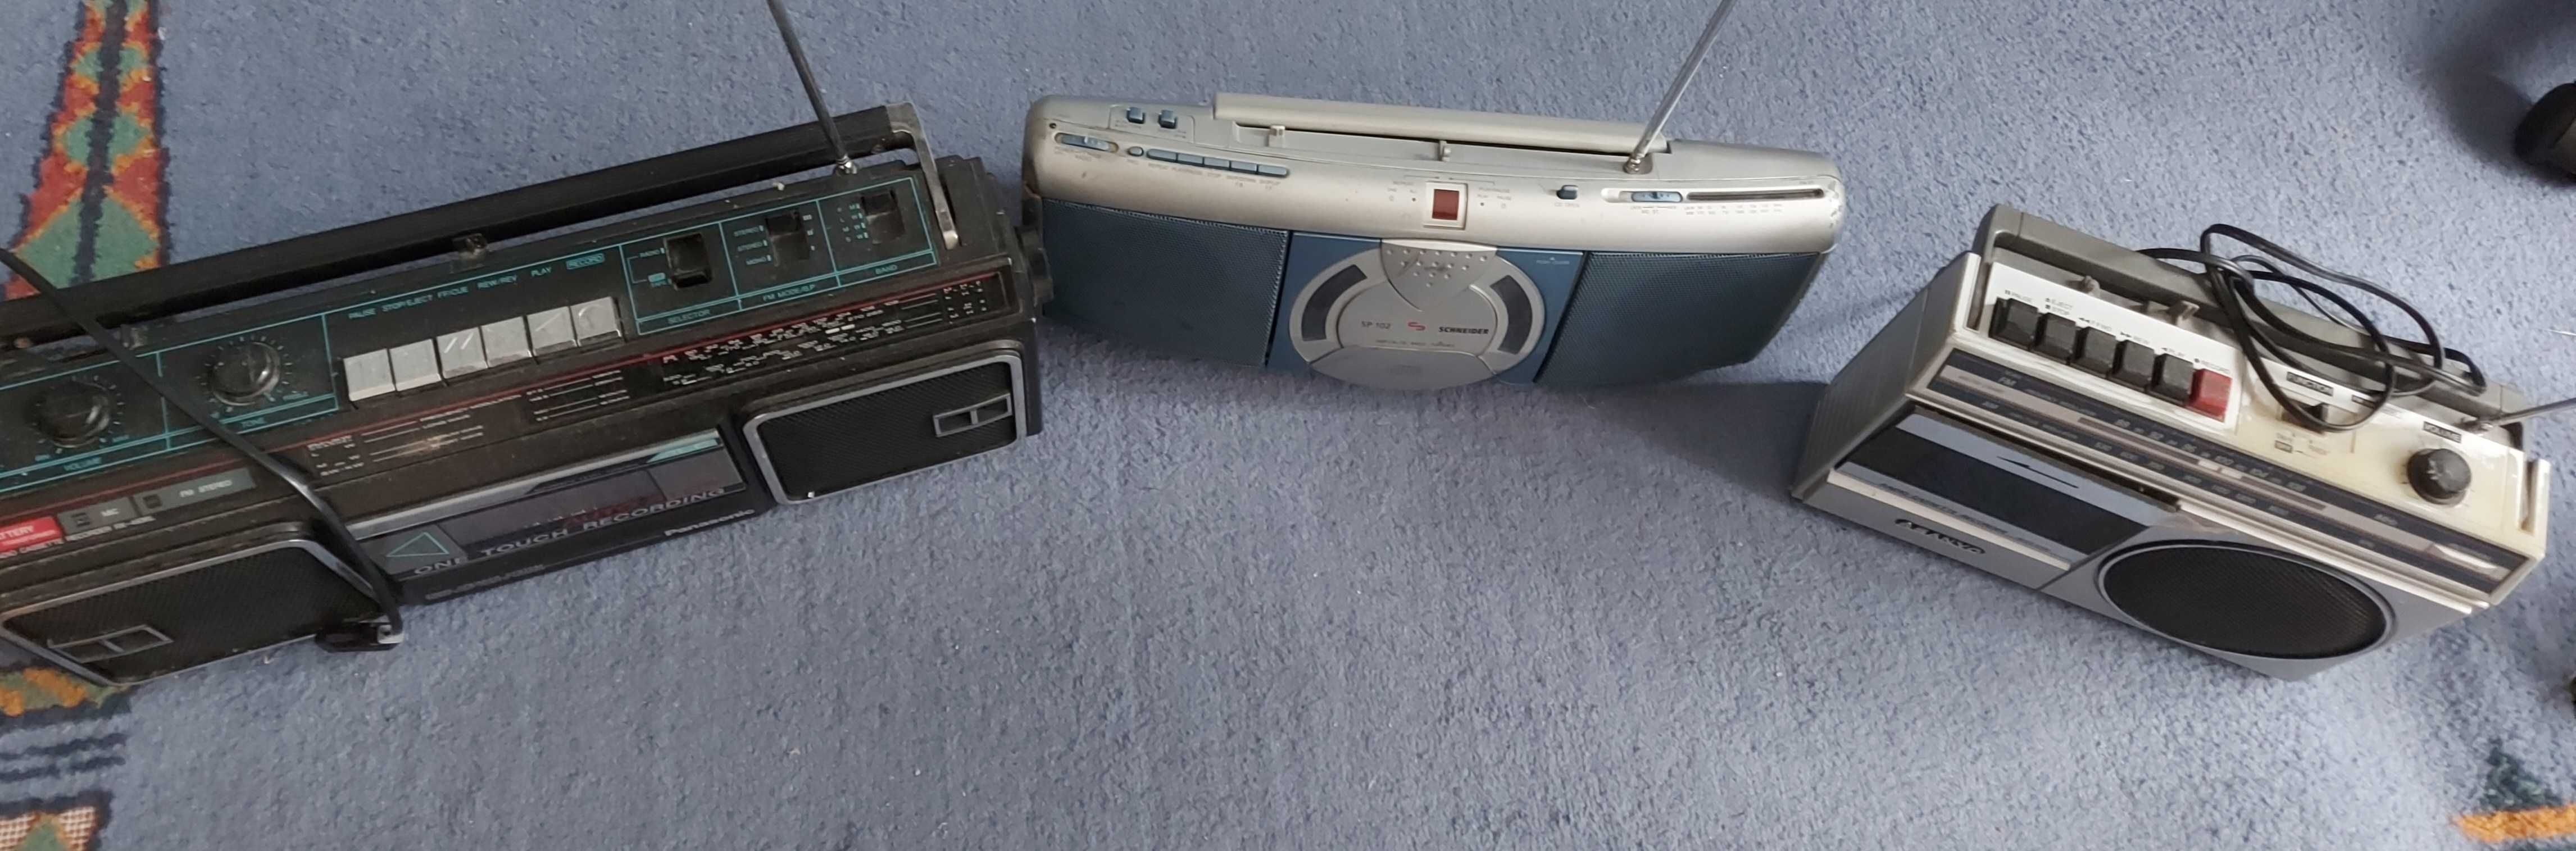 Radio cd Schneider si radiocasetofon Panasonic